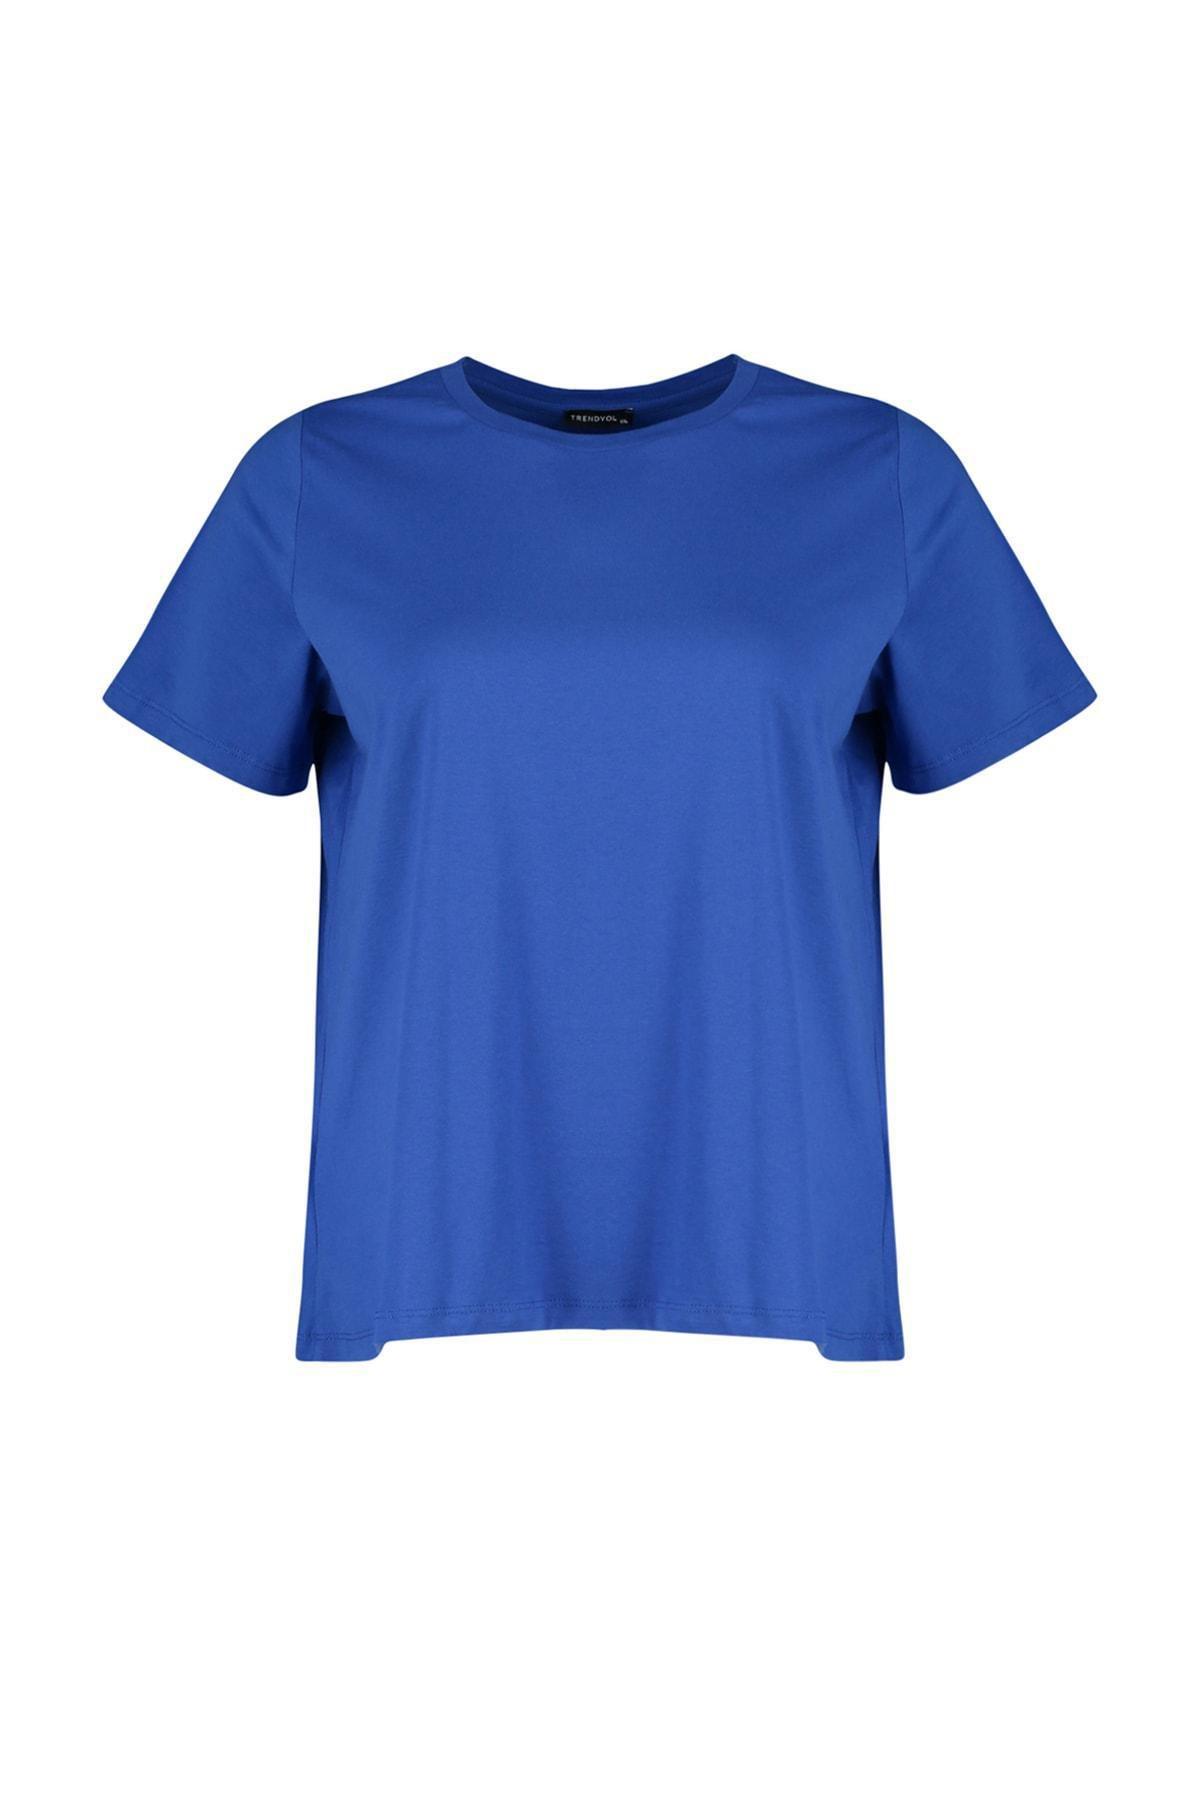 Trendyol - Blue Crew Neck Plus Size T-Shirt